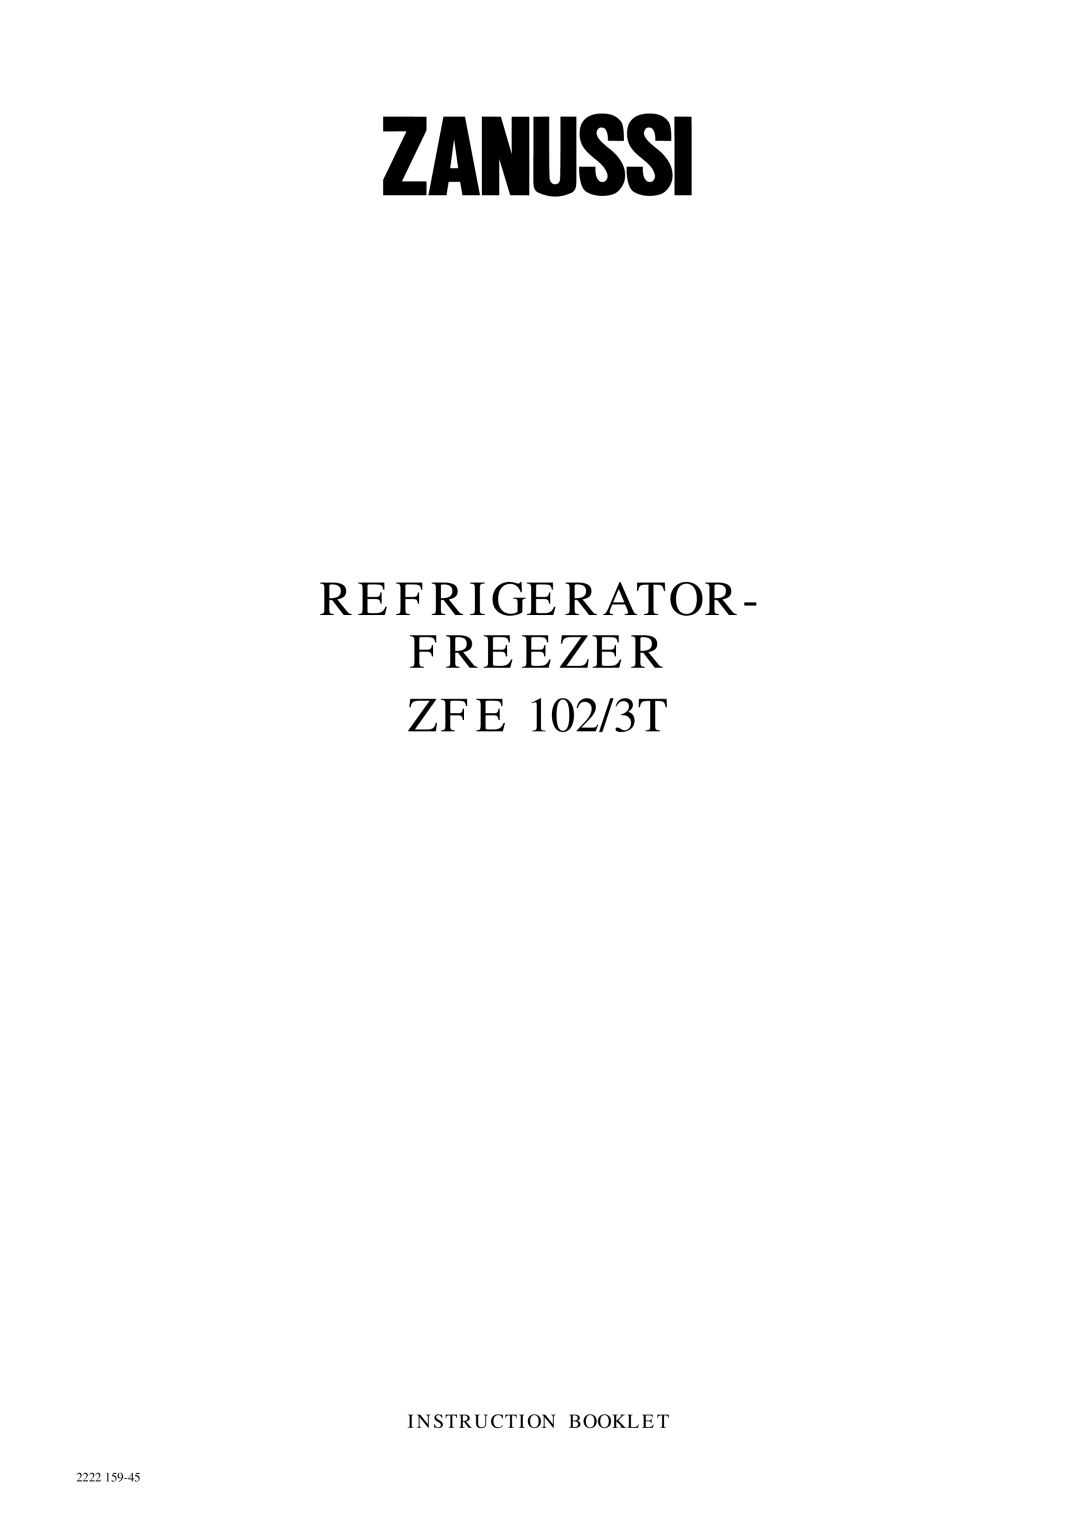 Zanussi manual REFRIGERATOR FREEZER ZFE 102/3T, Instruction Booklet, 2222 